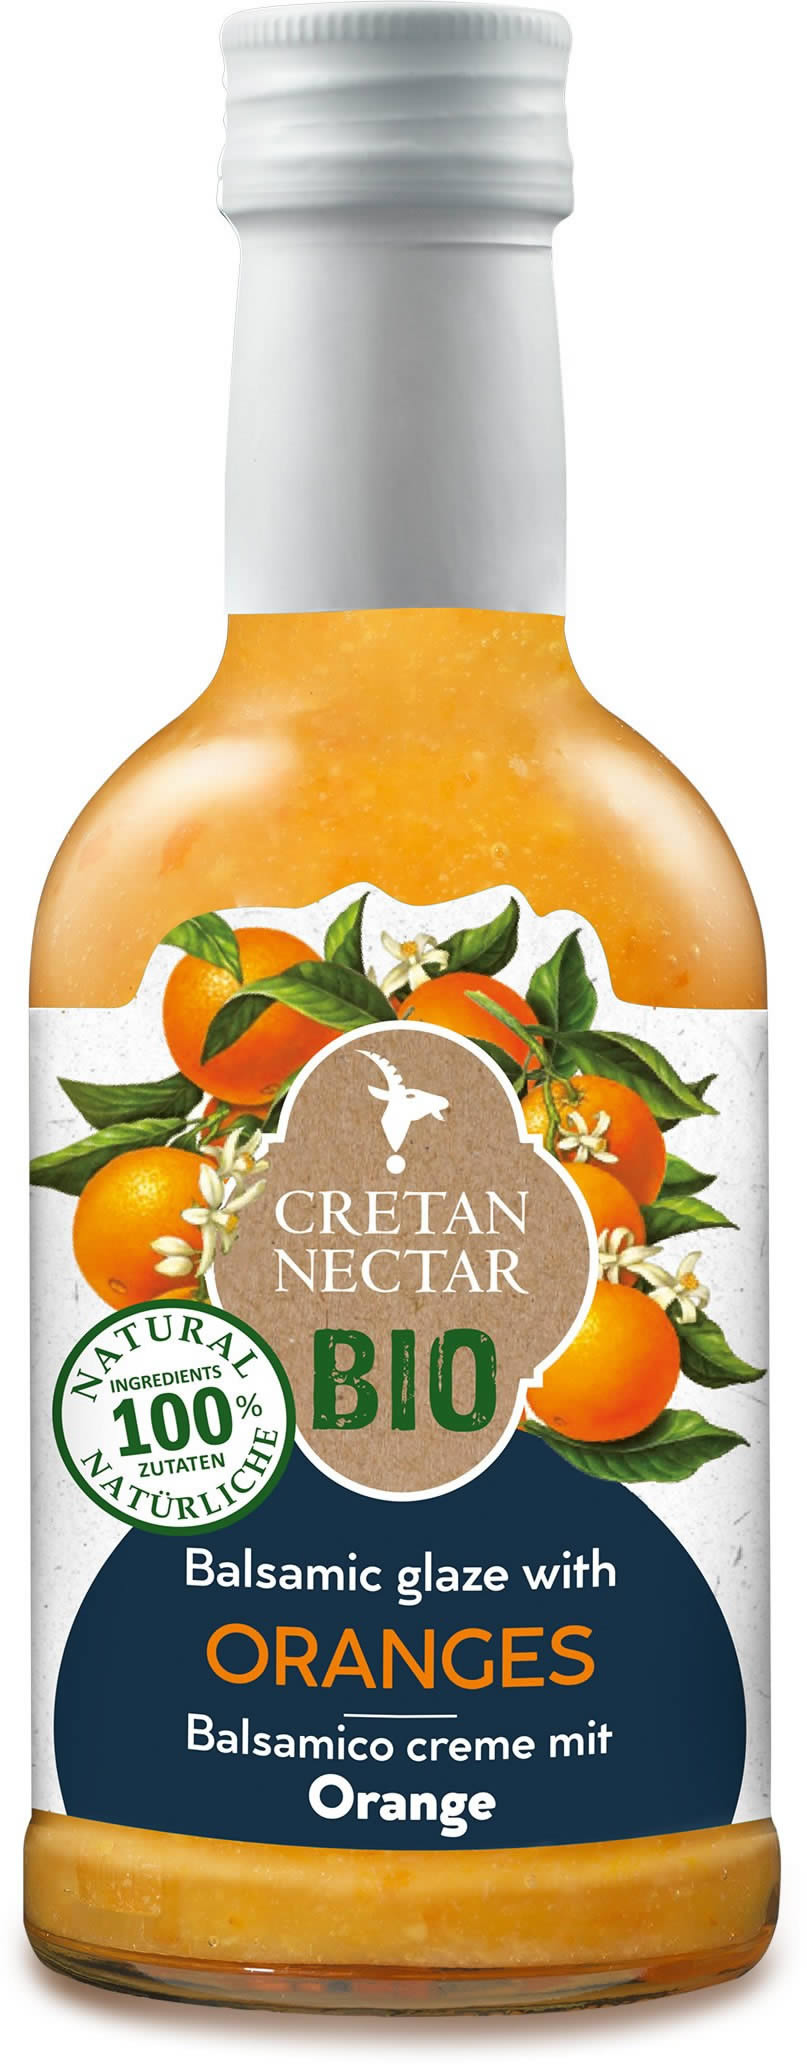 Cretan Nectar - Balsamico Creme mit Orange BIO 250 ml